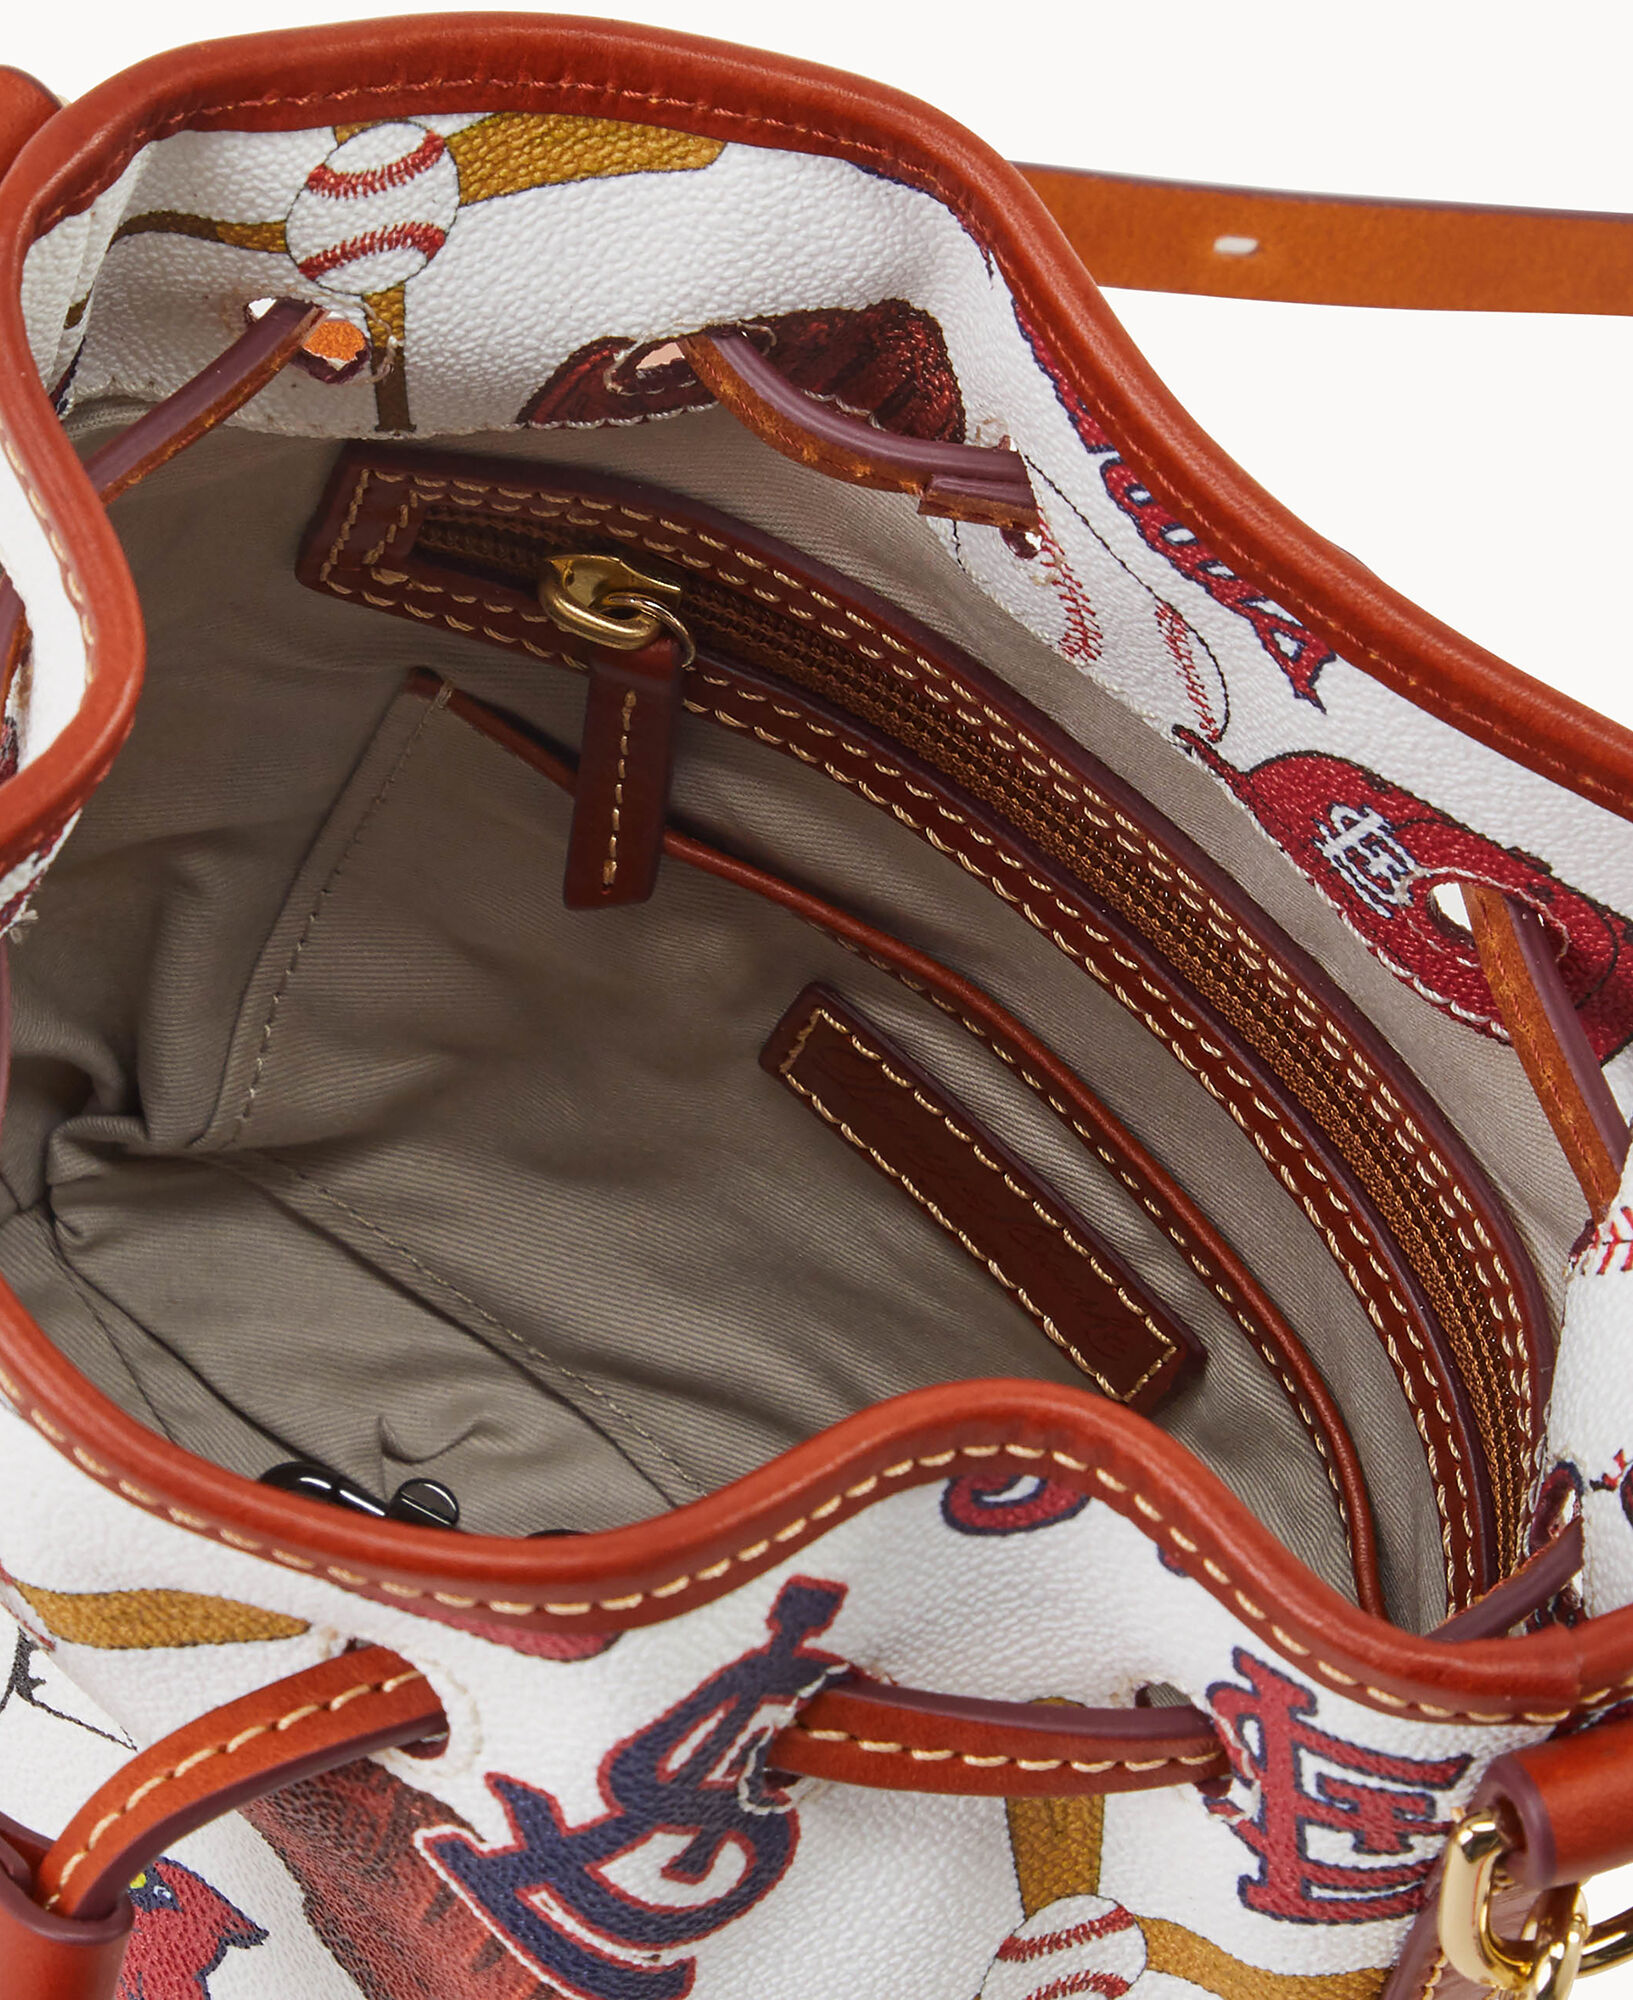 Dooney & Bourke St. Louis Cardinals Small Drawstring Shoulder Bag